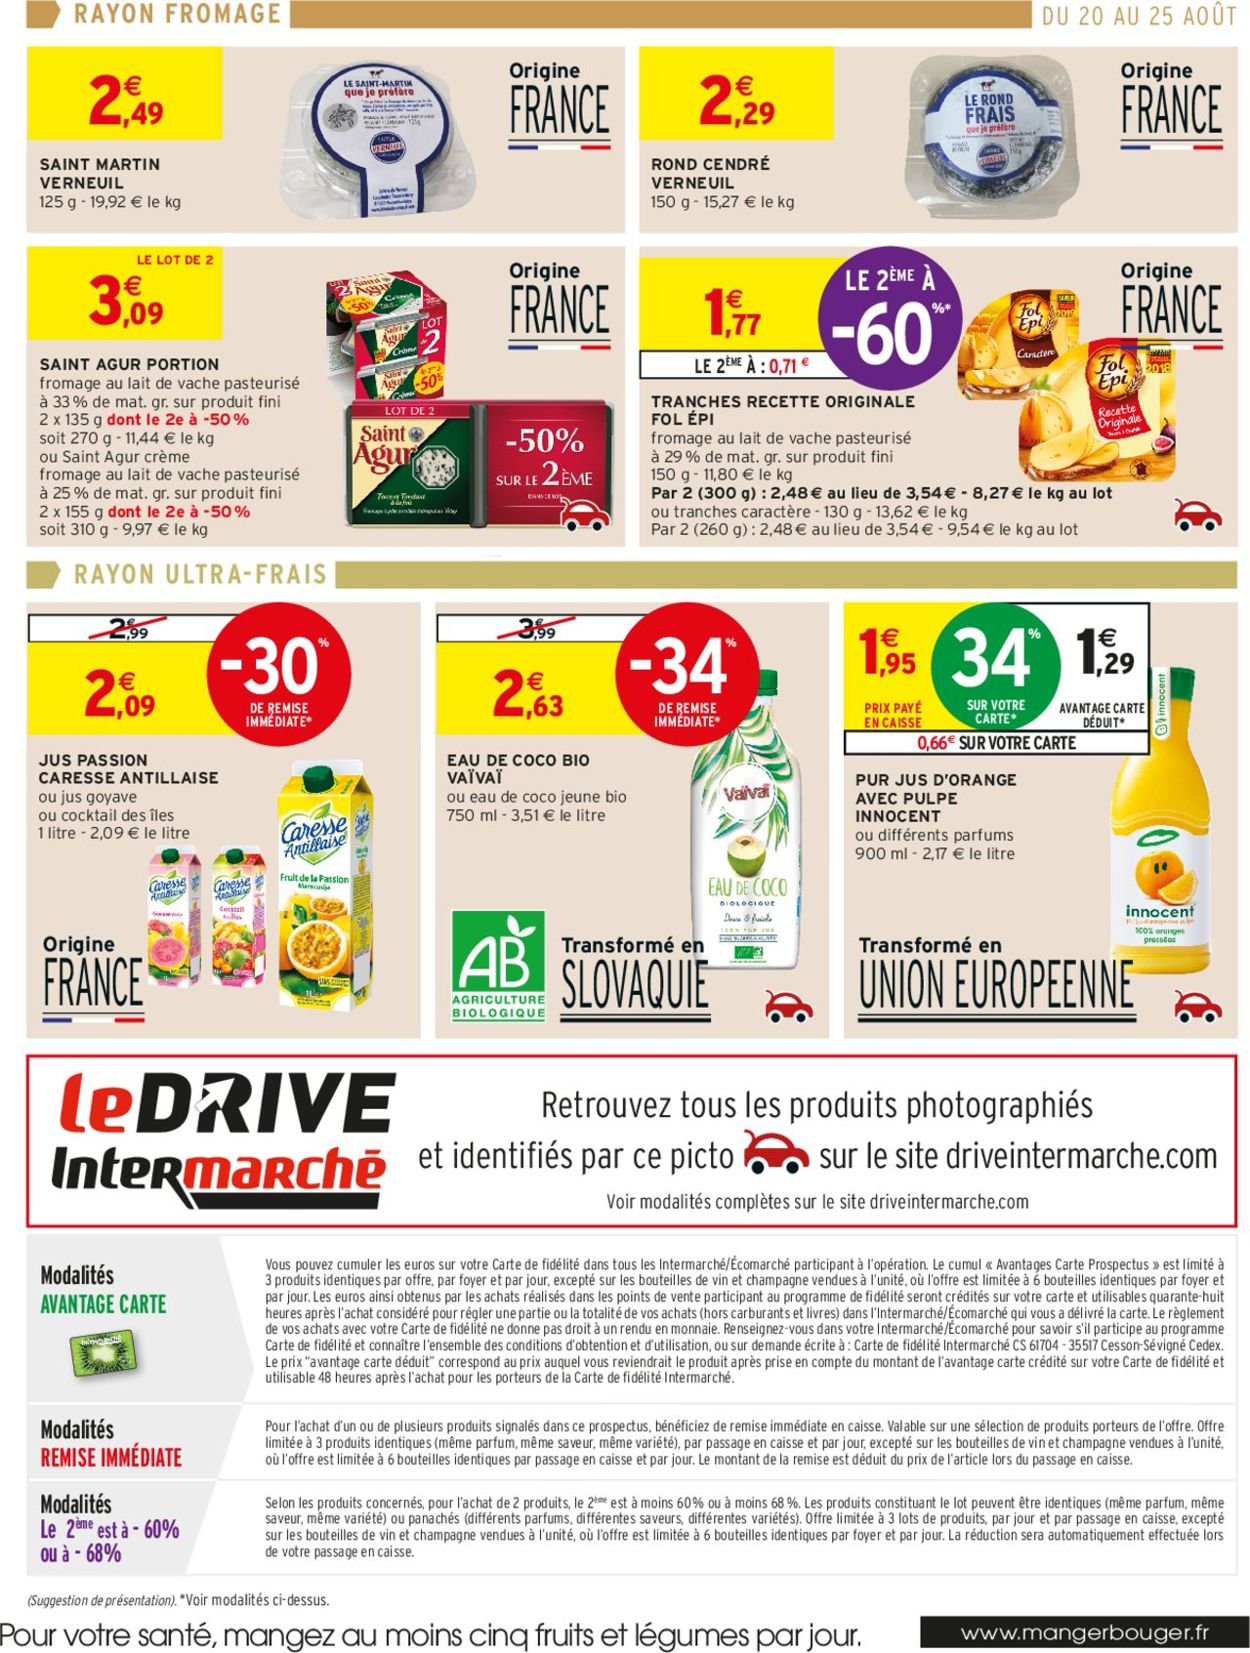 Intermarché Catalogue - 20.08-25.08.2019 (Page 10)